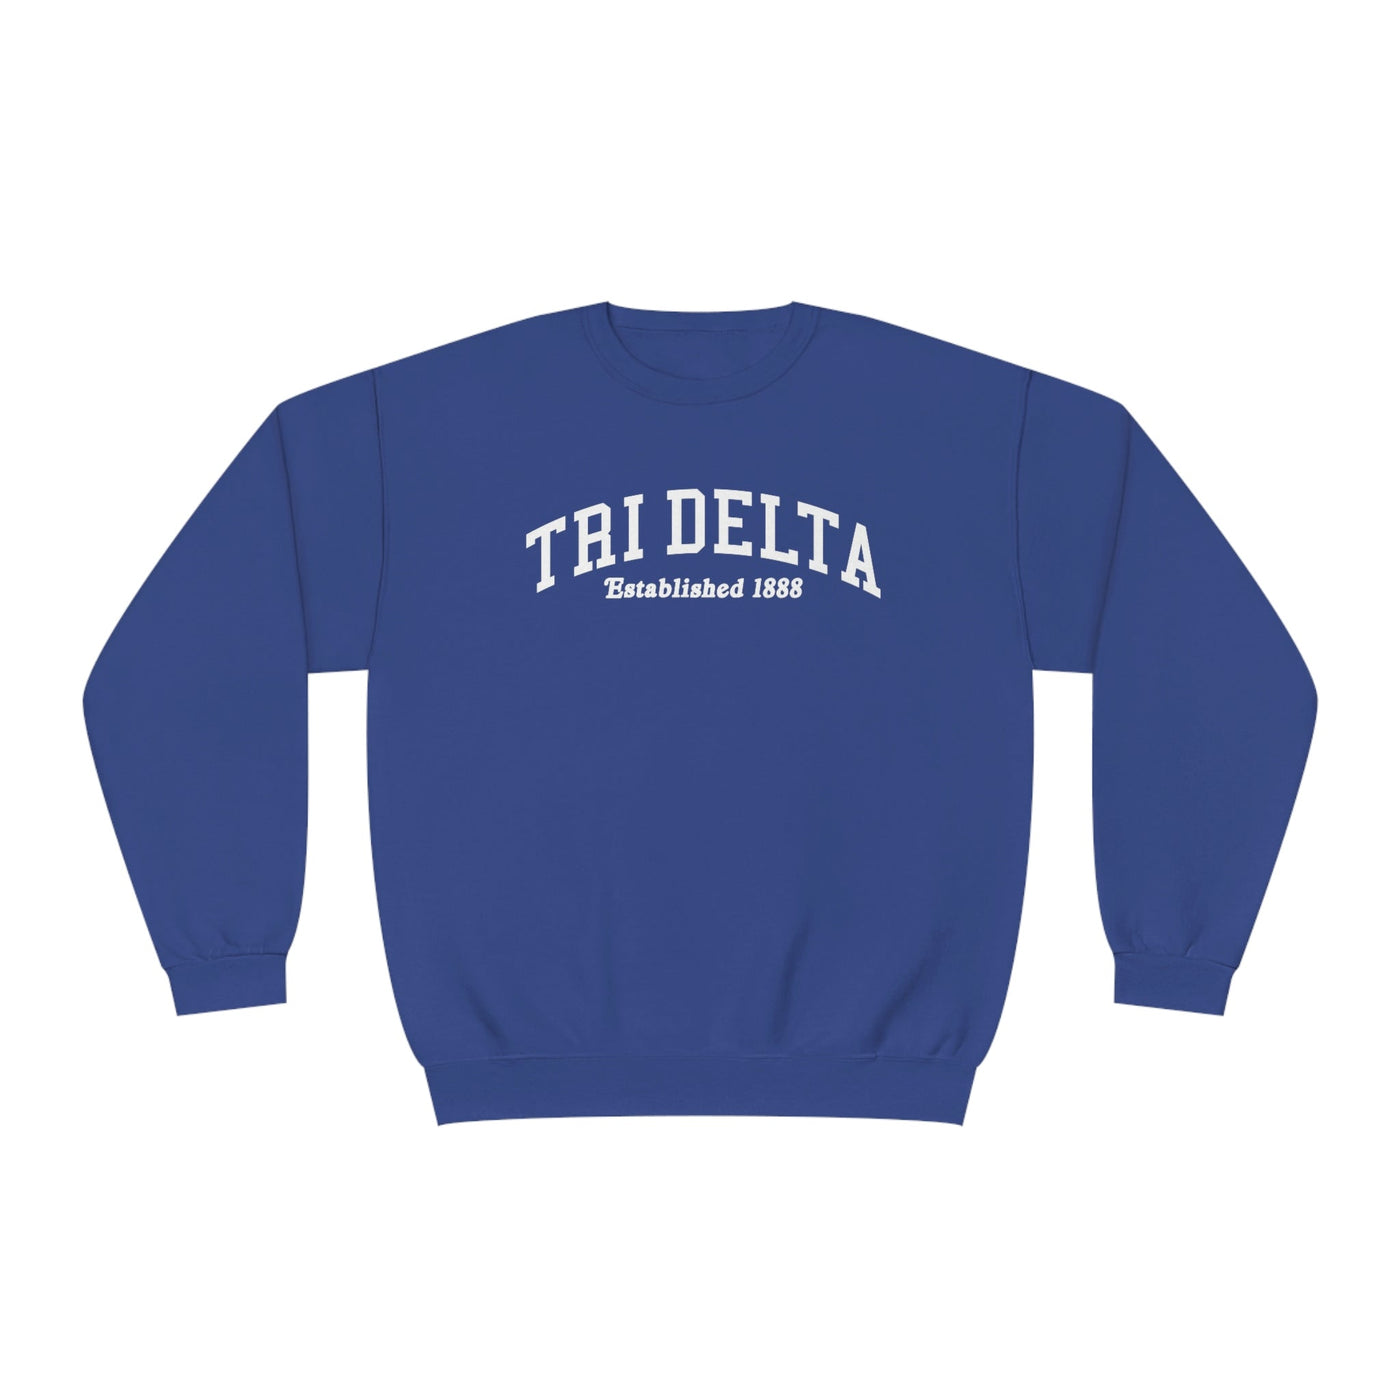 Delta Delta Delta Sorority Varsity College Tri Delta Crewneck Sweatshirt